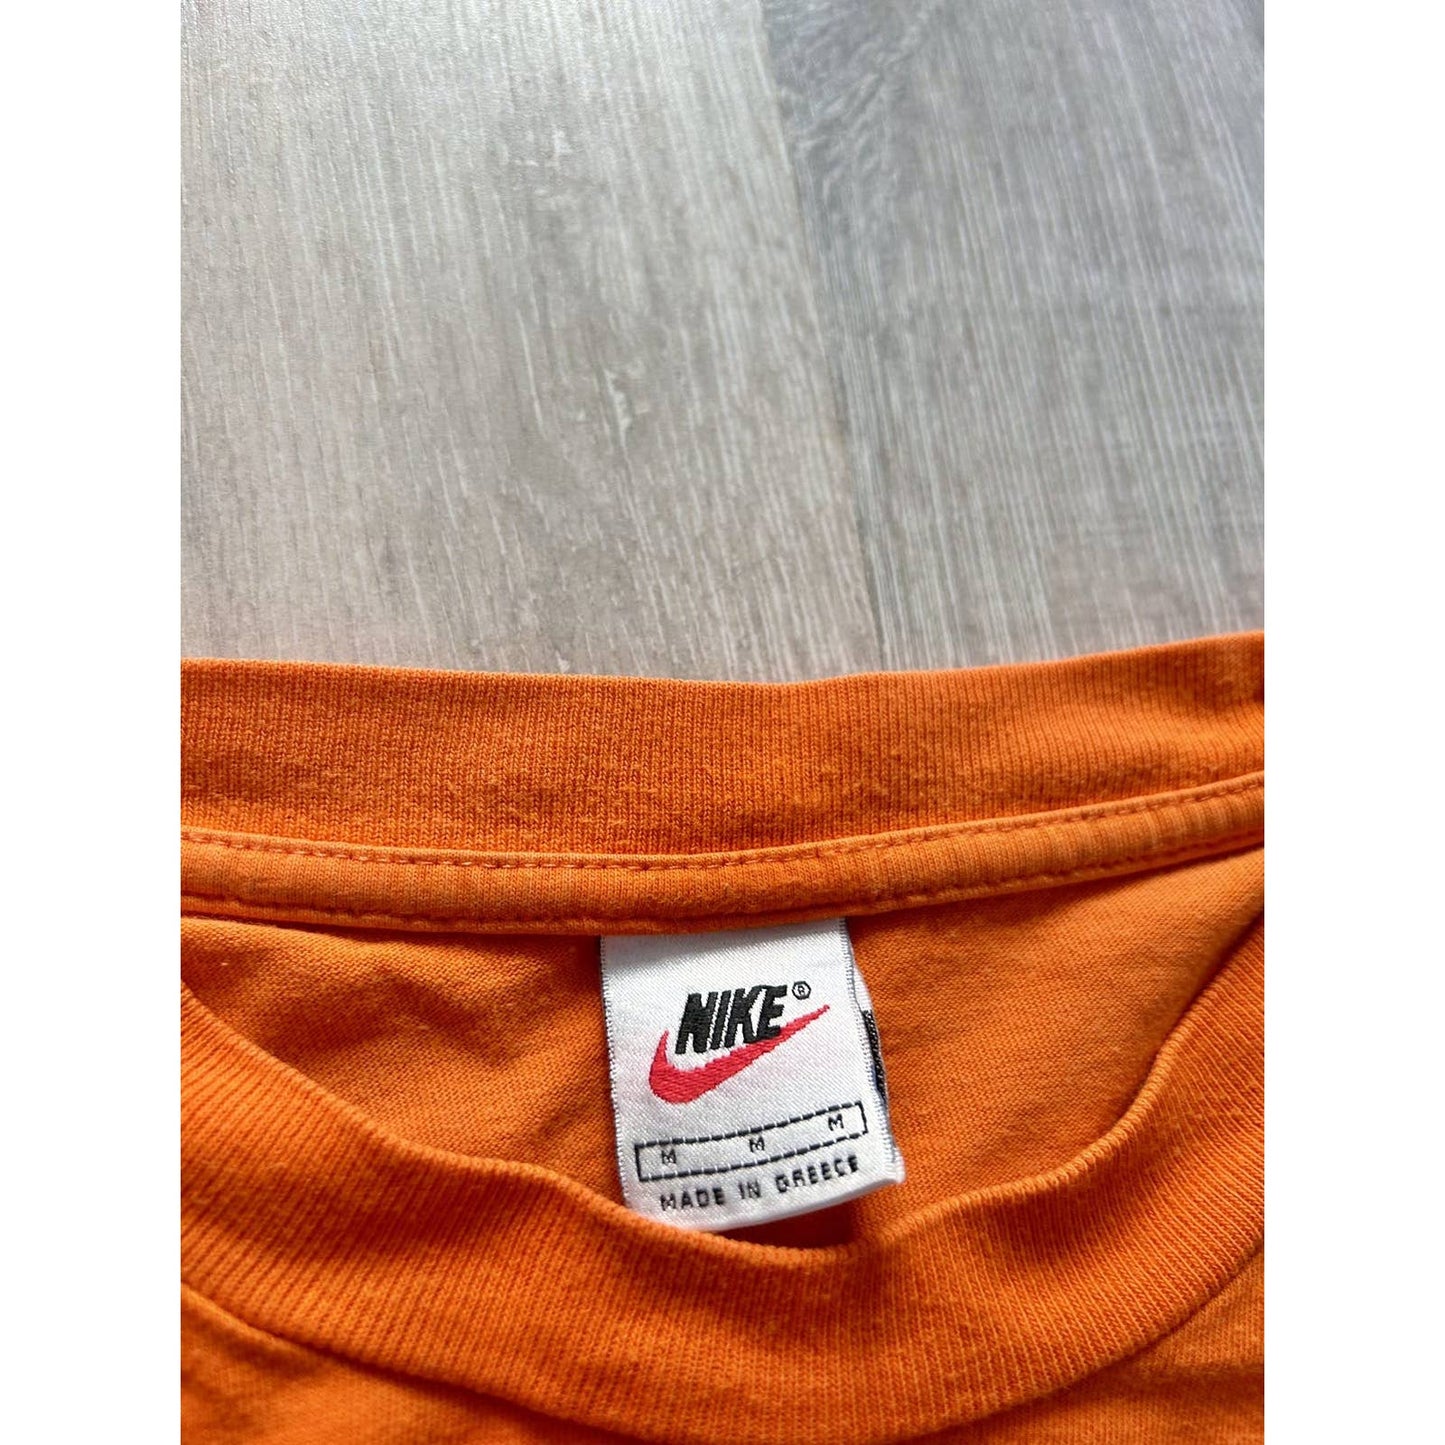 Nike vintage t-shirt 90s Orange big swoosh rare